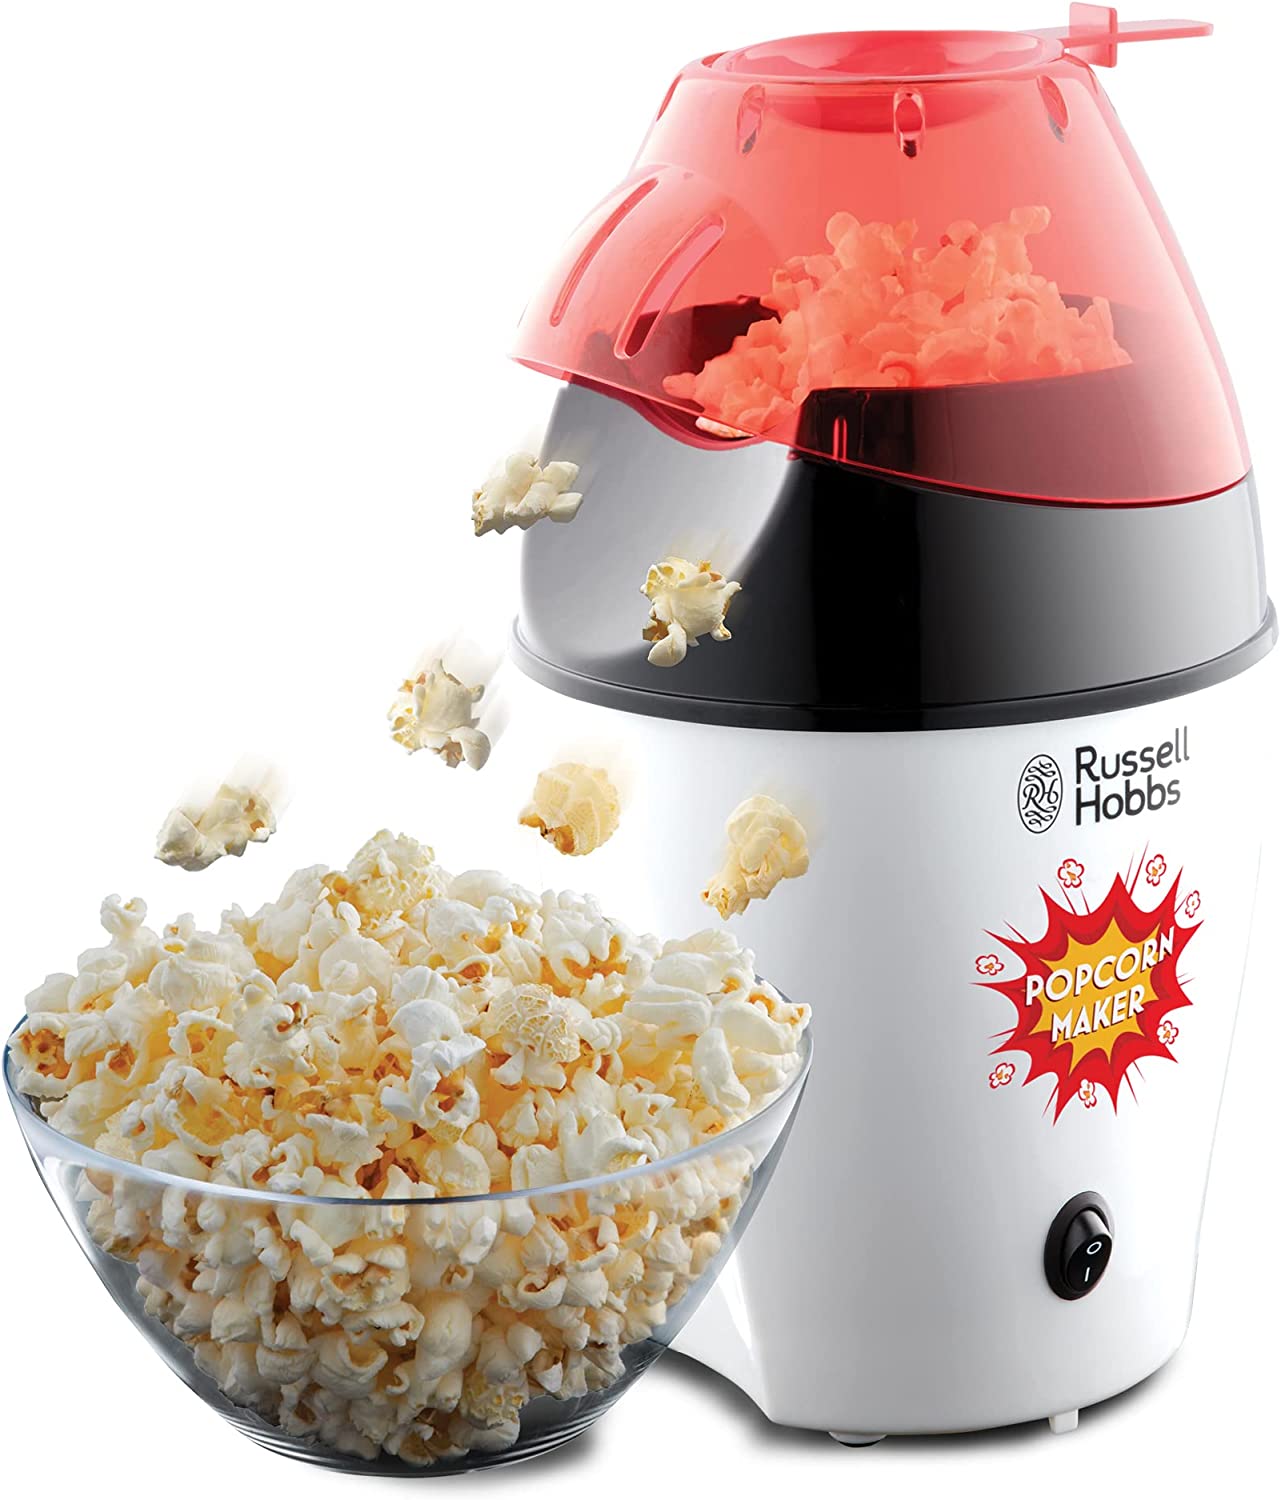 Russell Hobbs Popcorn Maker [Test Winner] Fiesta (Hot Air Popcorn Maker, Fat & Oil Free, incl. Corn Measuring Spoon, 1200W) 24630-56